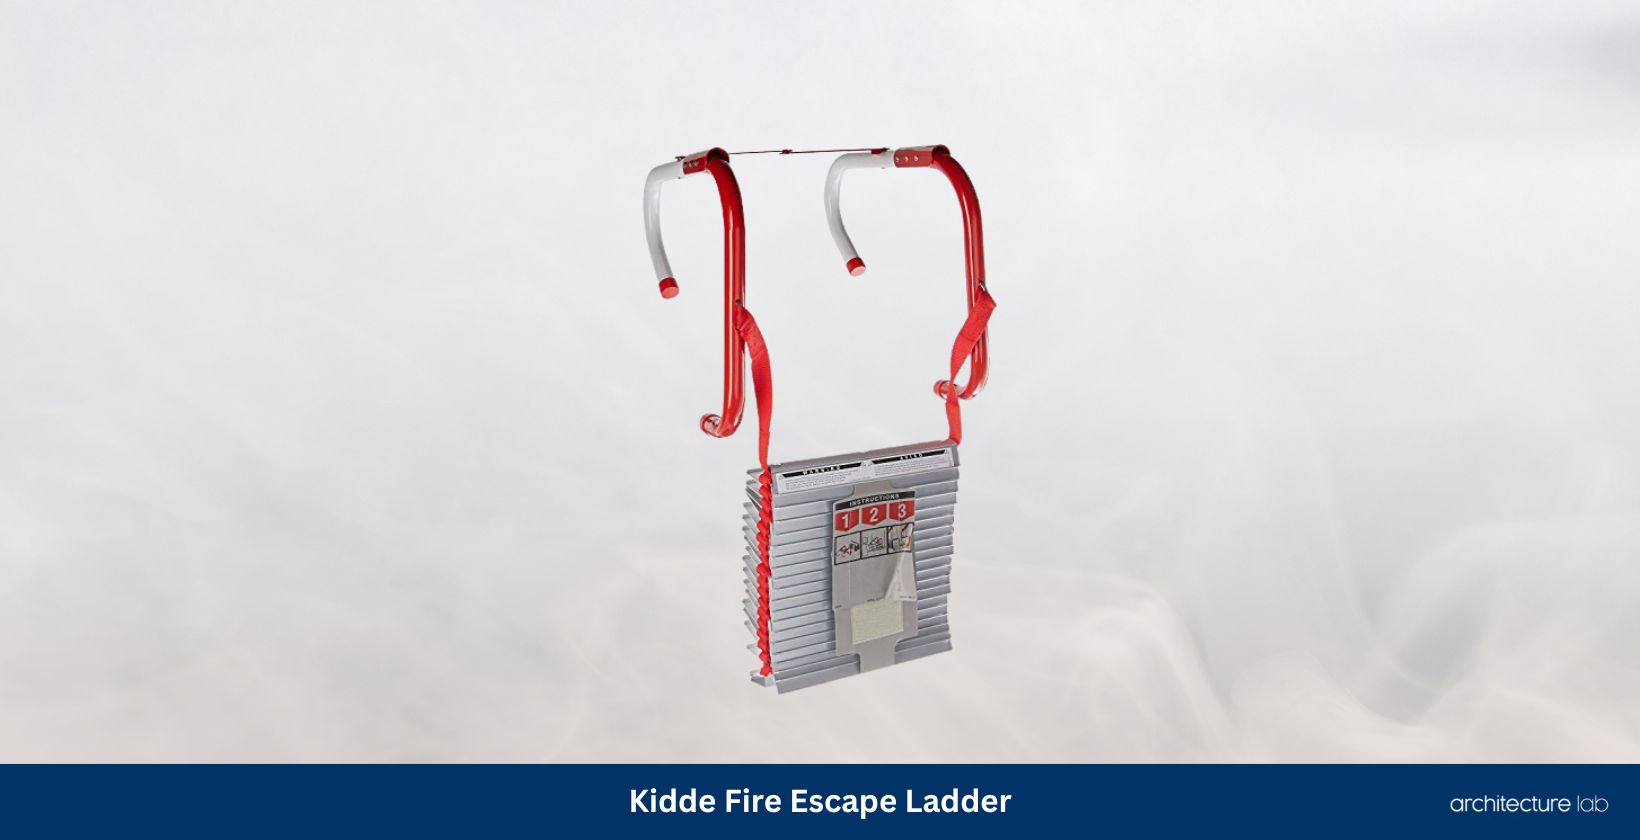 Kidde fire escape ladder 2 story rope ladder 13